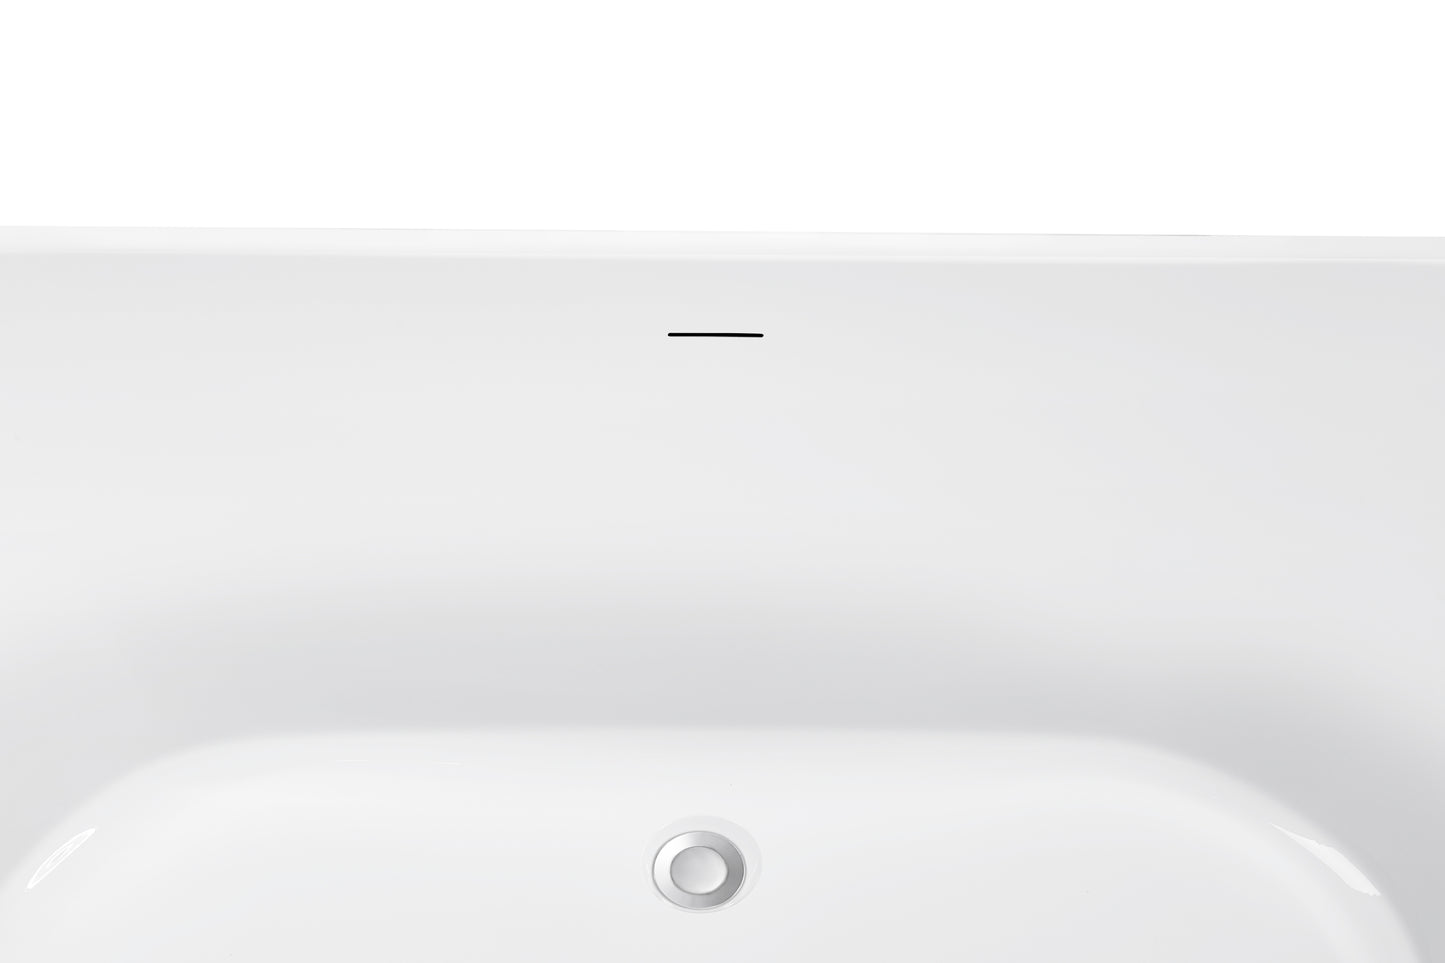 62" 100% Acrylic Freestanding Bathtub，Contemporary Soaking Tub，white Bathtub